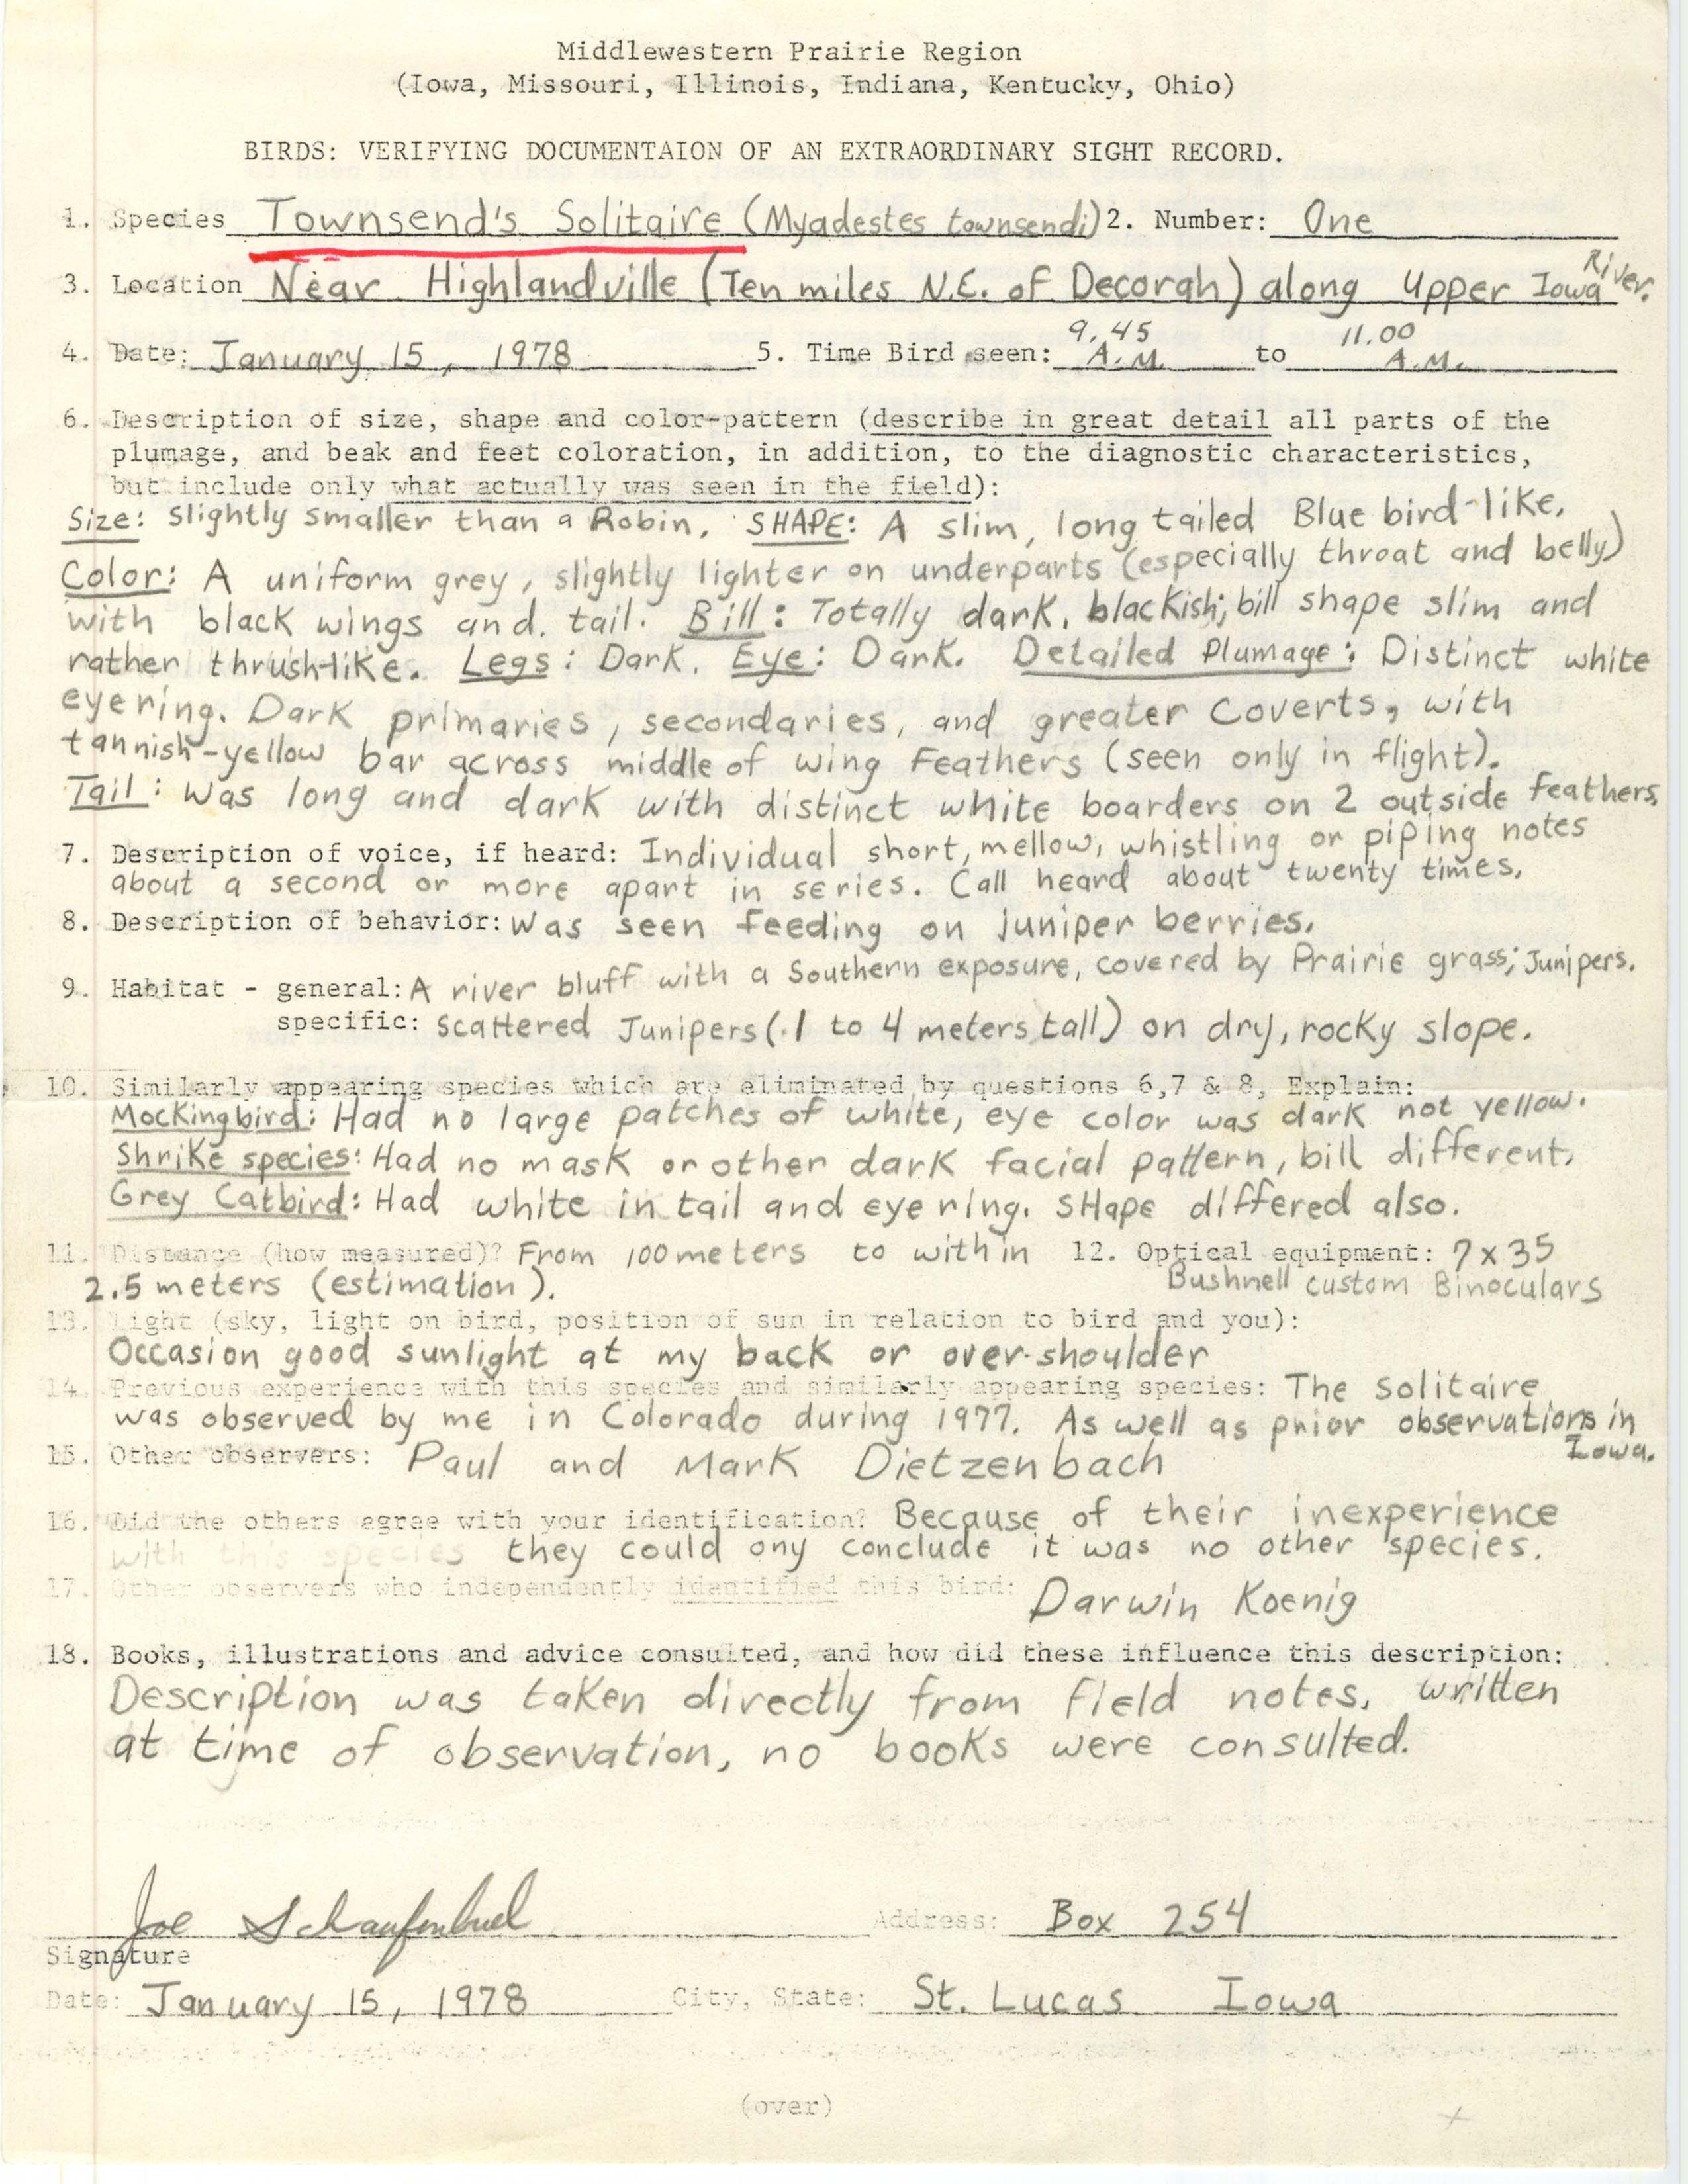 Rare bird documentation form for Townsend's Solitaire near Highlandville, 1978